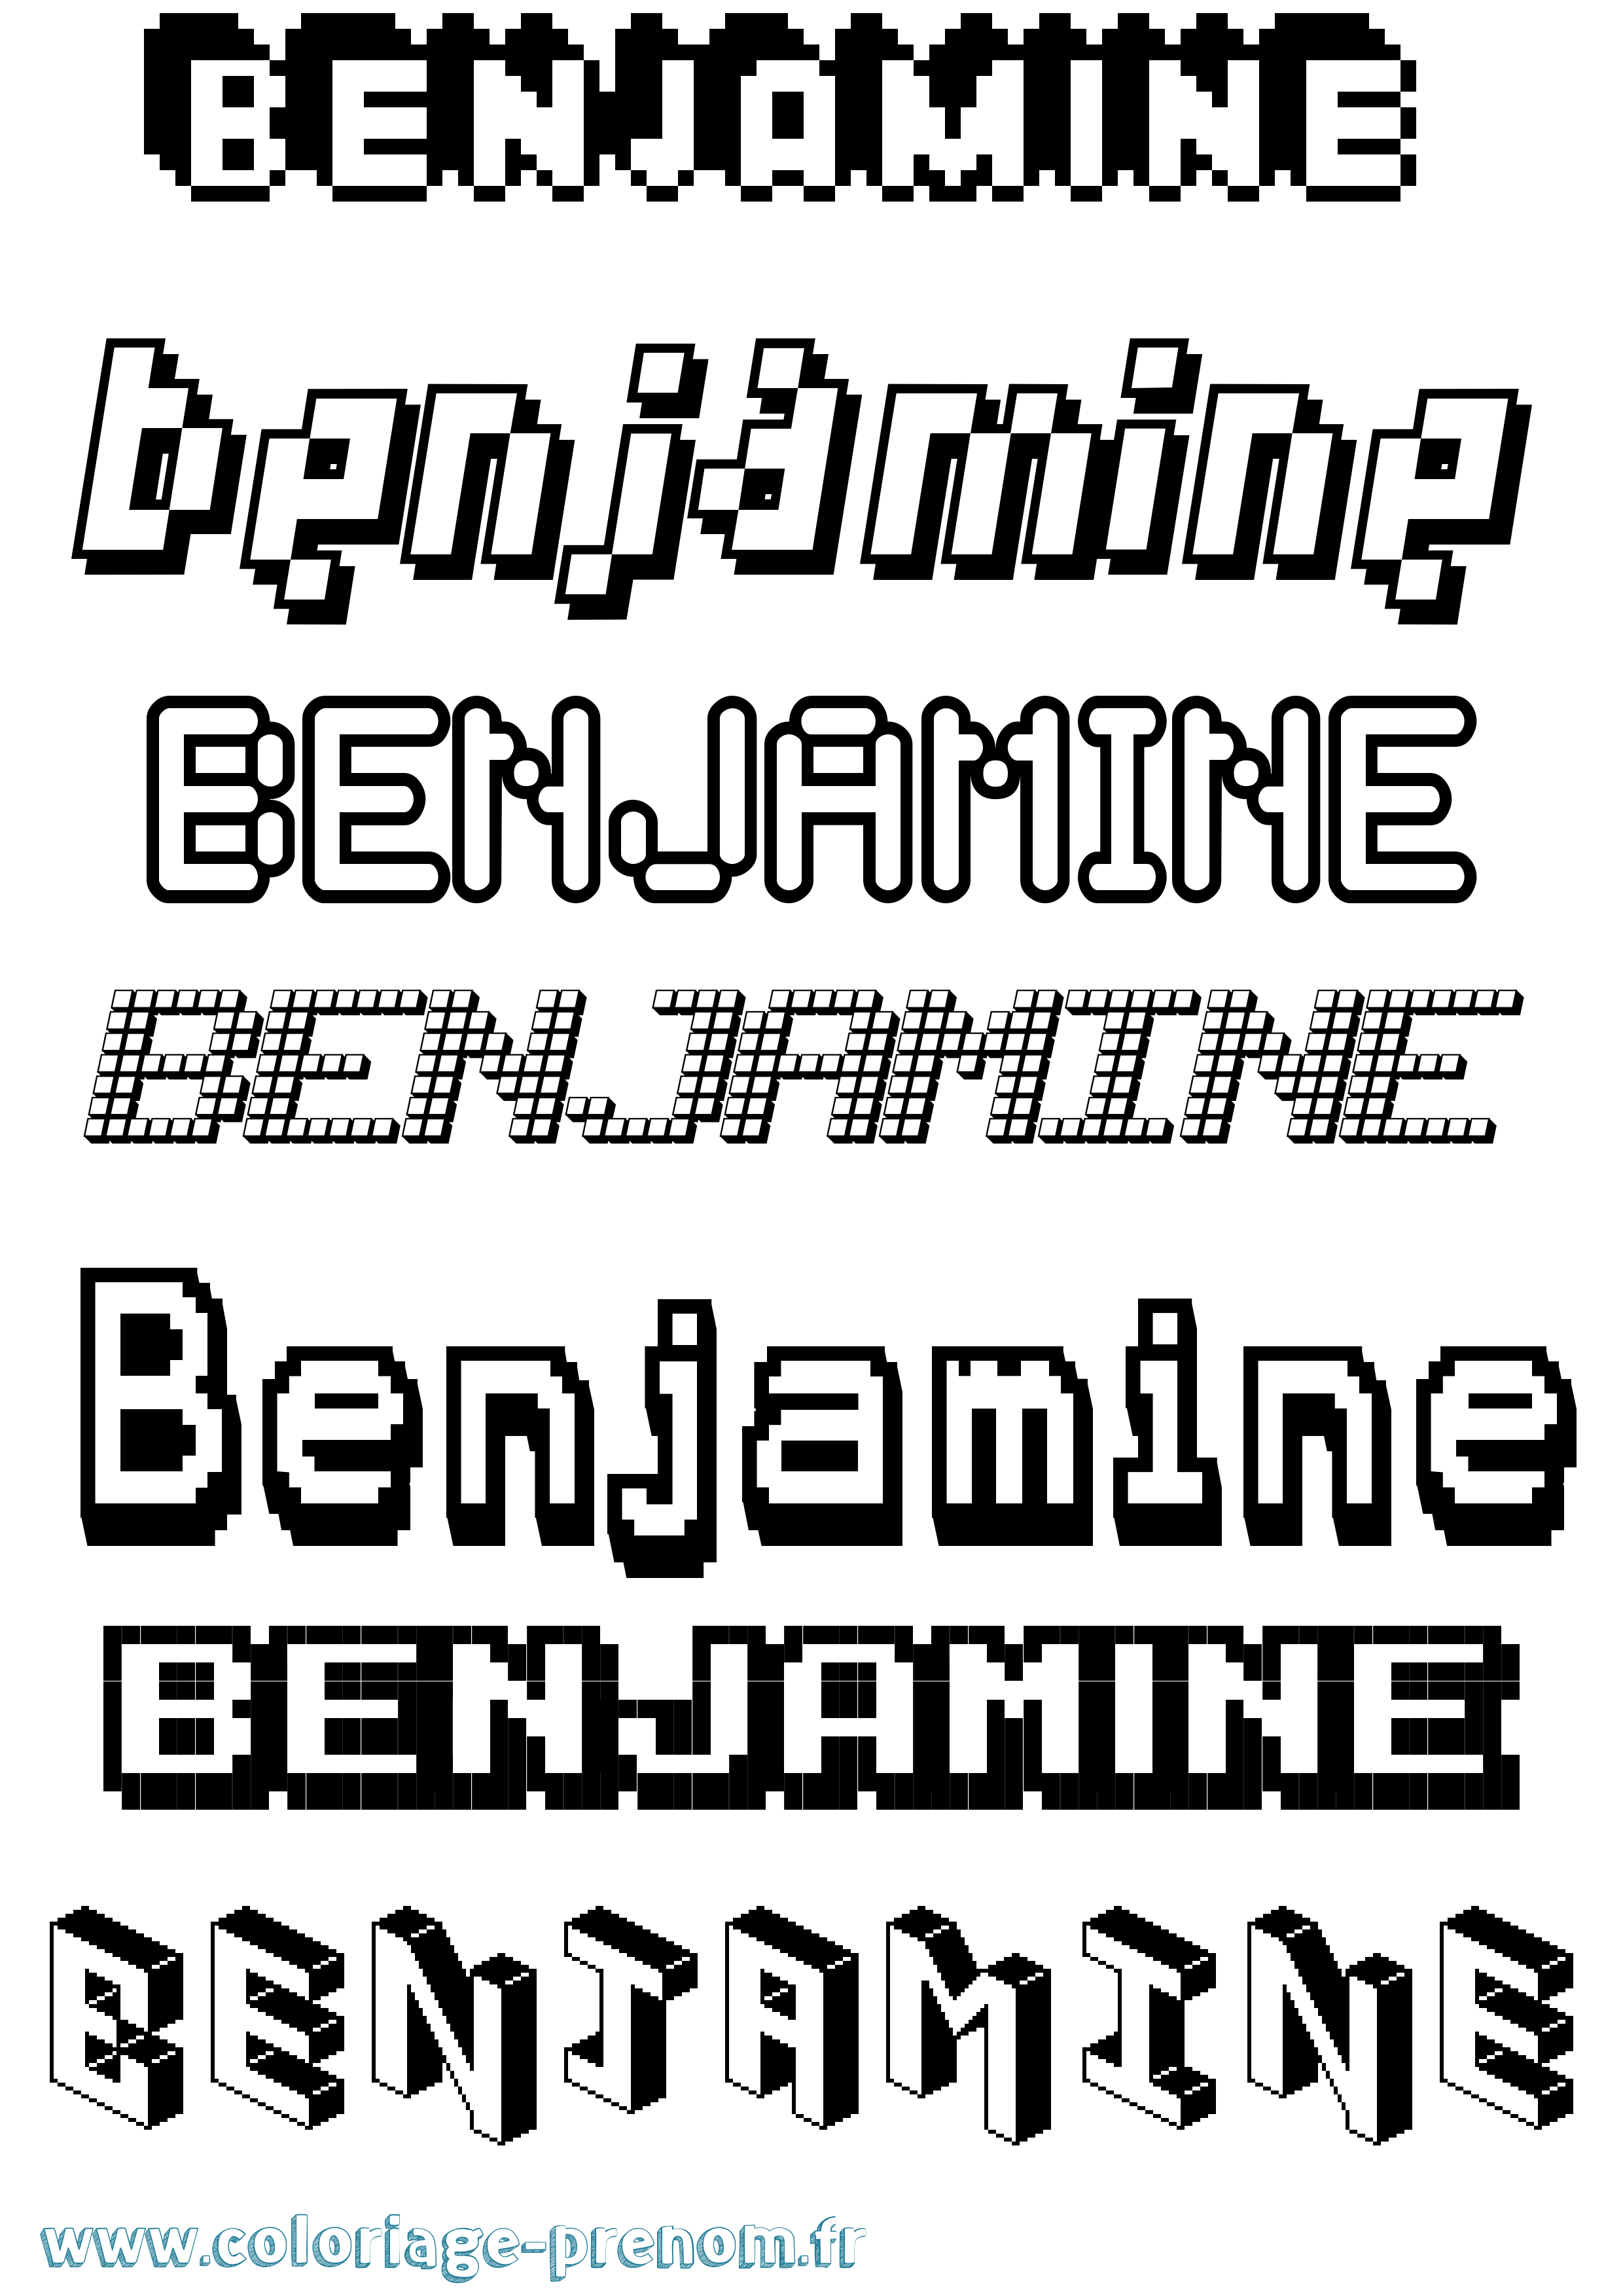 Coloriage prénom Benjamine Pixel